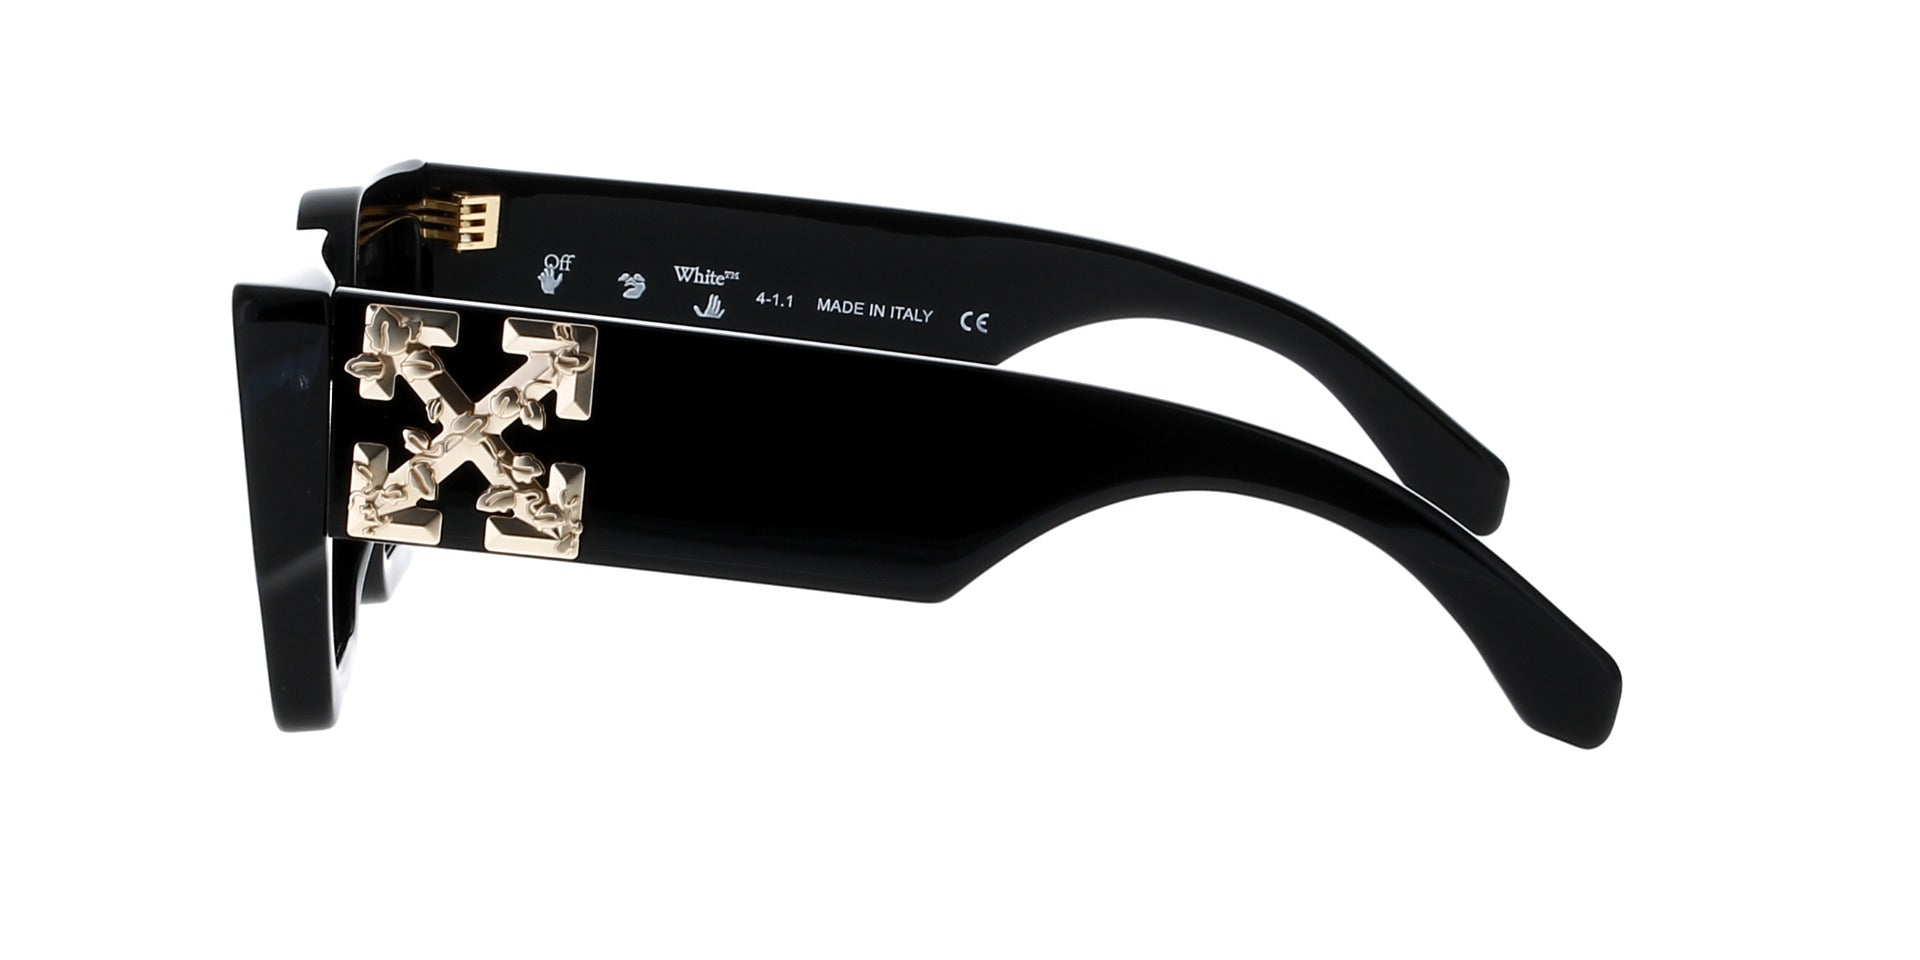 Off-White Black & Gold-Arrows 'Catalina' Sunglasses